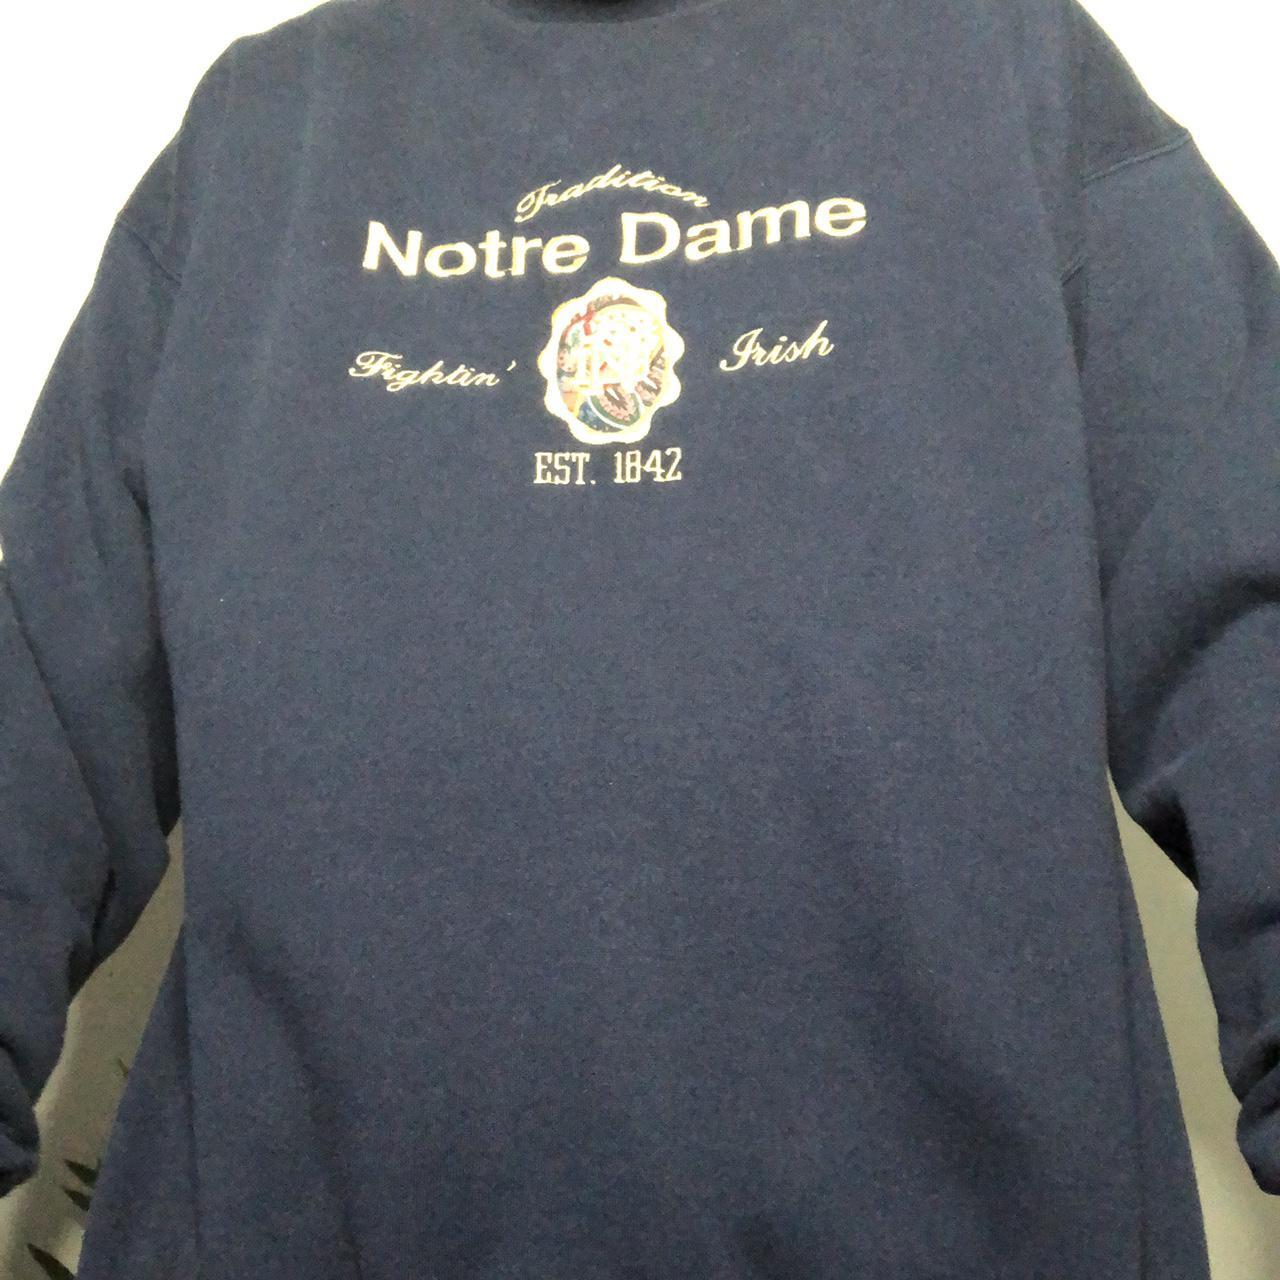 Product Image 3 - Vintage Notre Dame University Sweatshirt